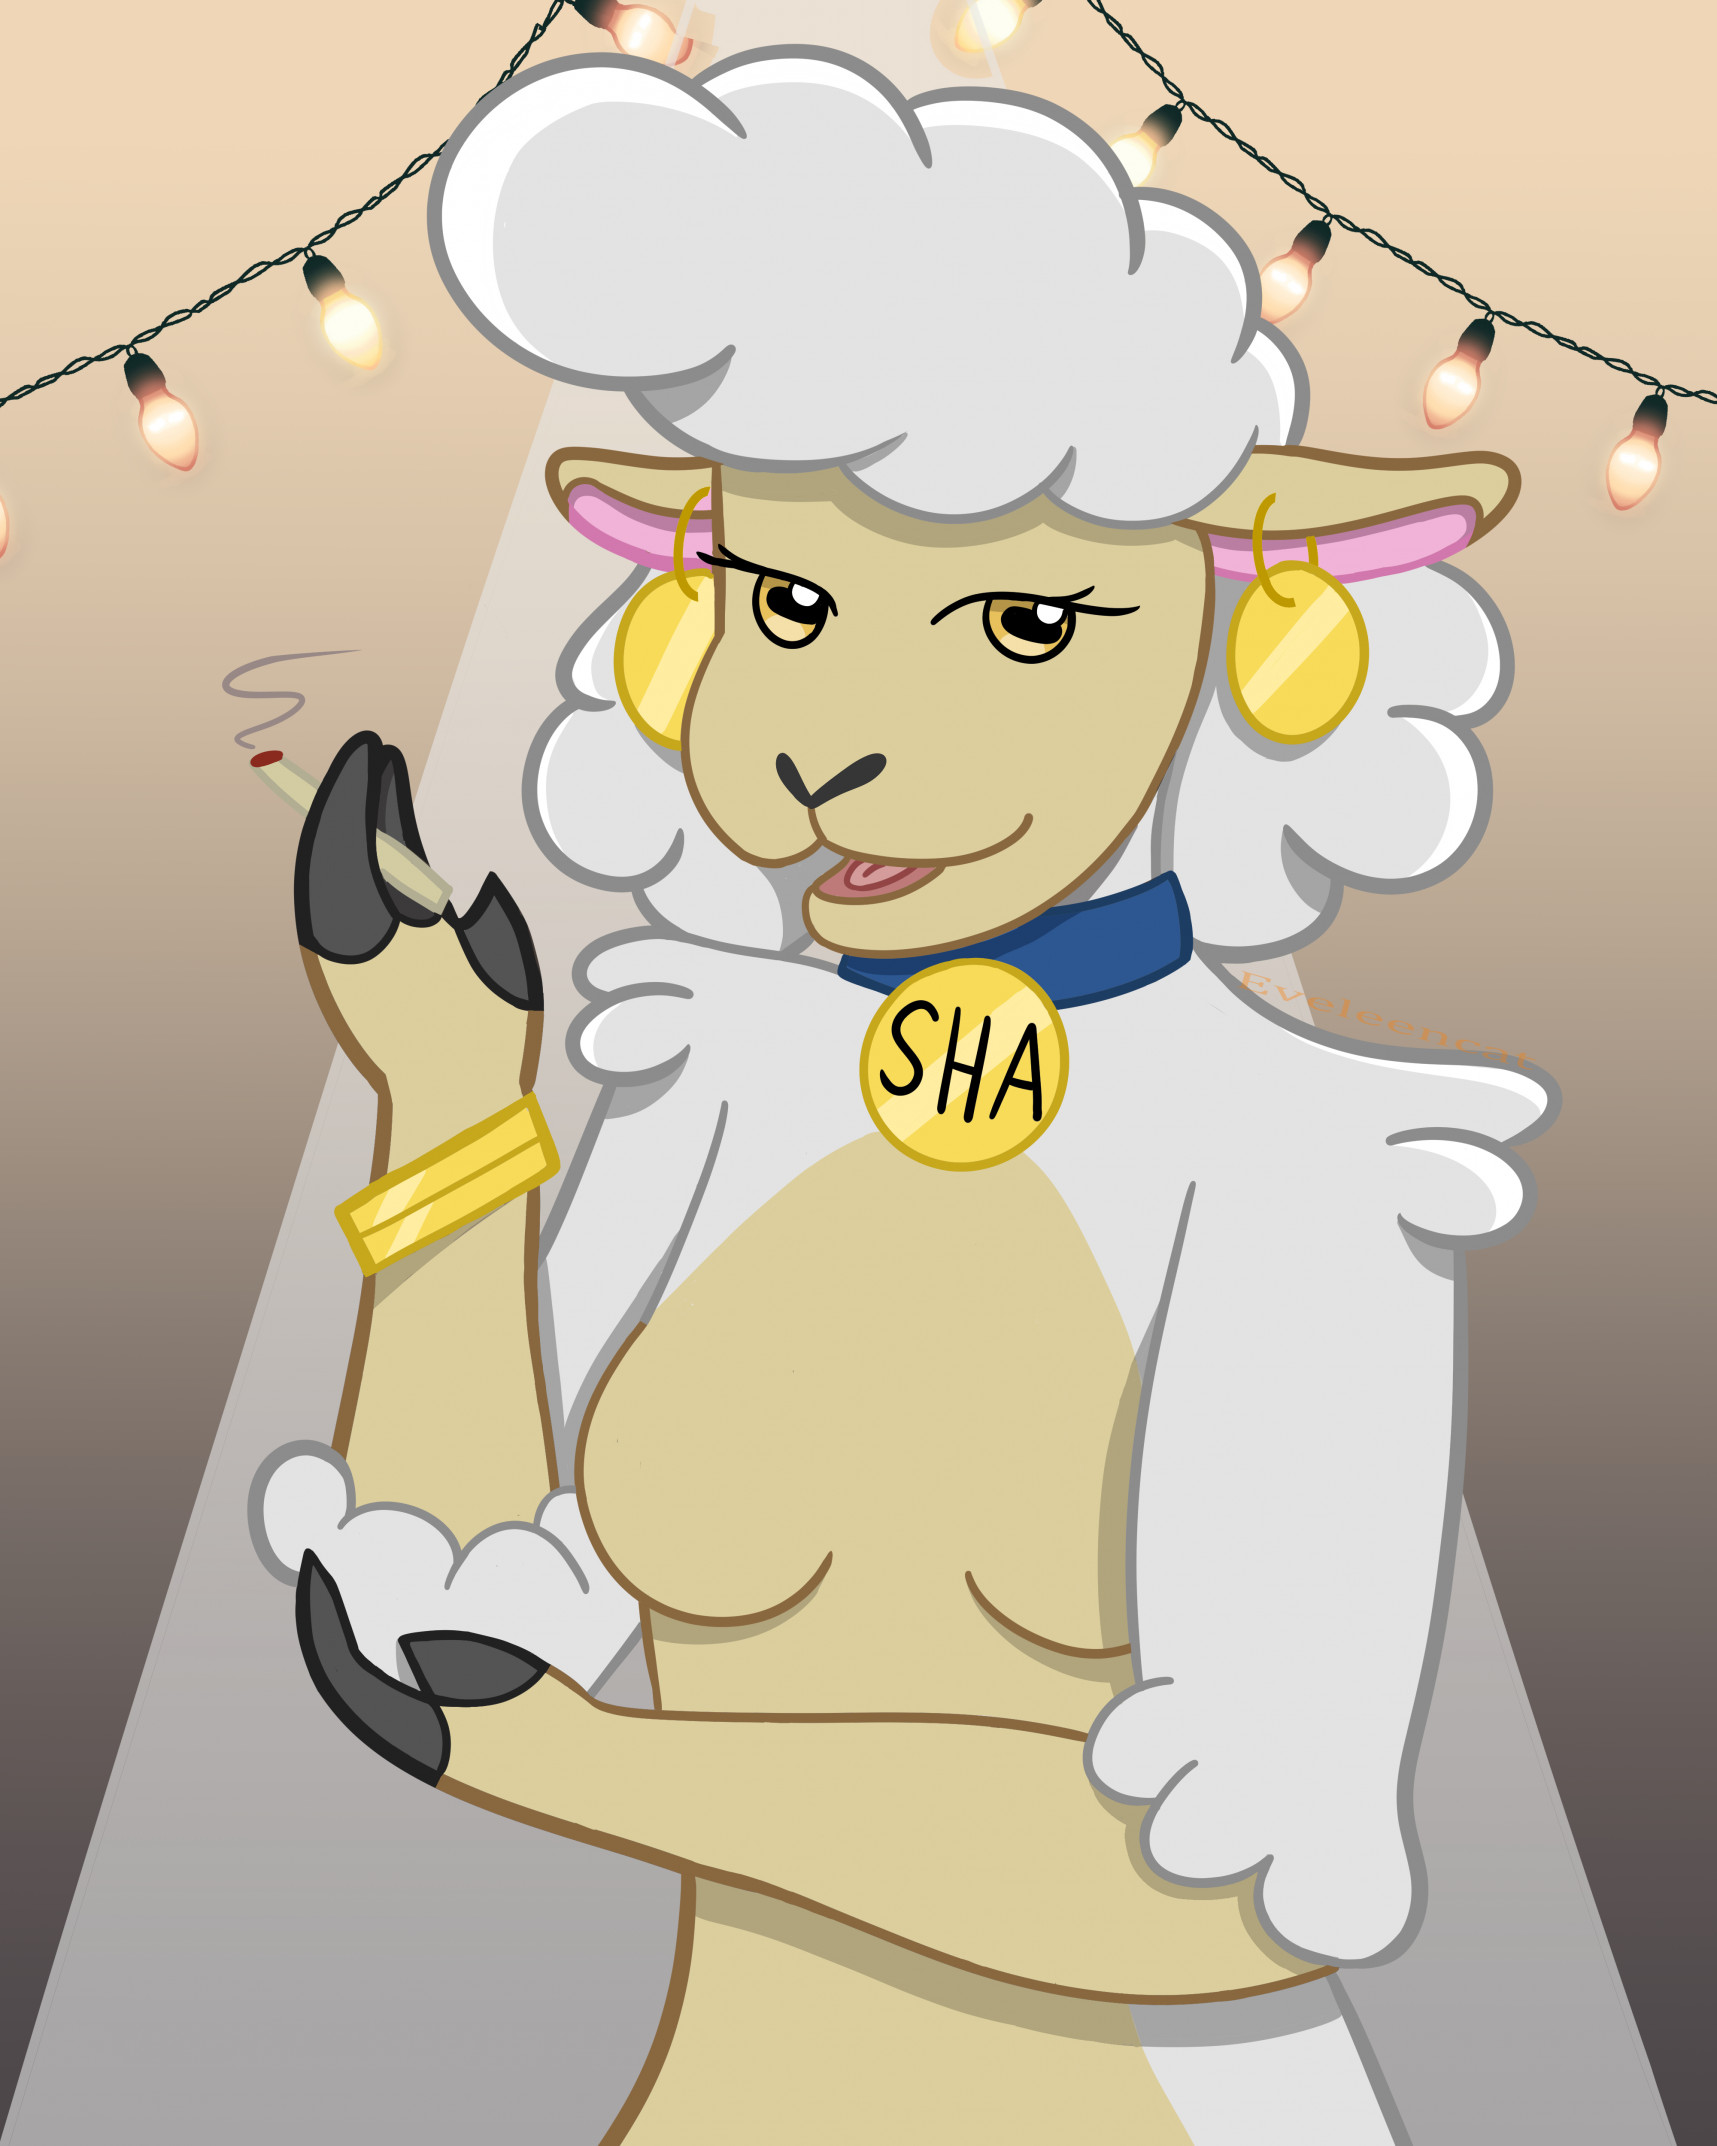 Sha the sheep